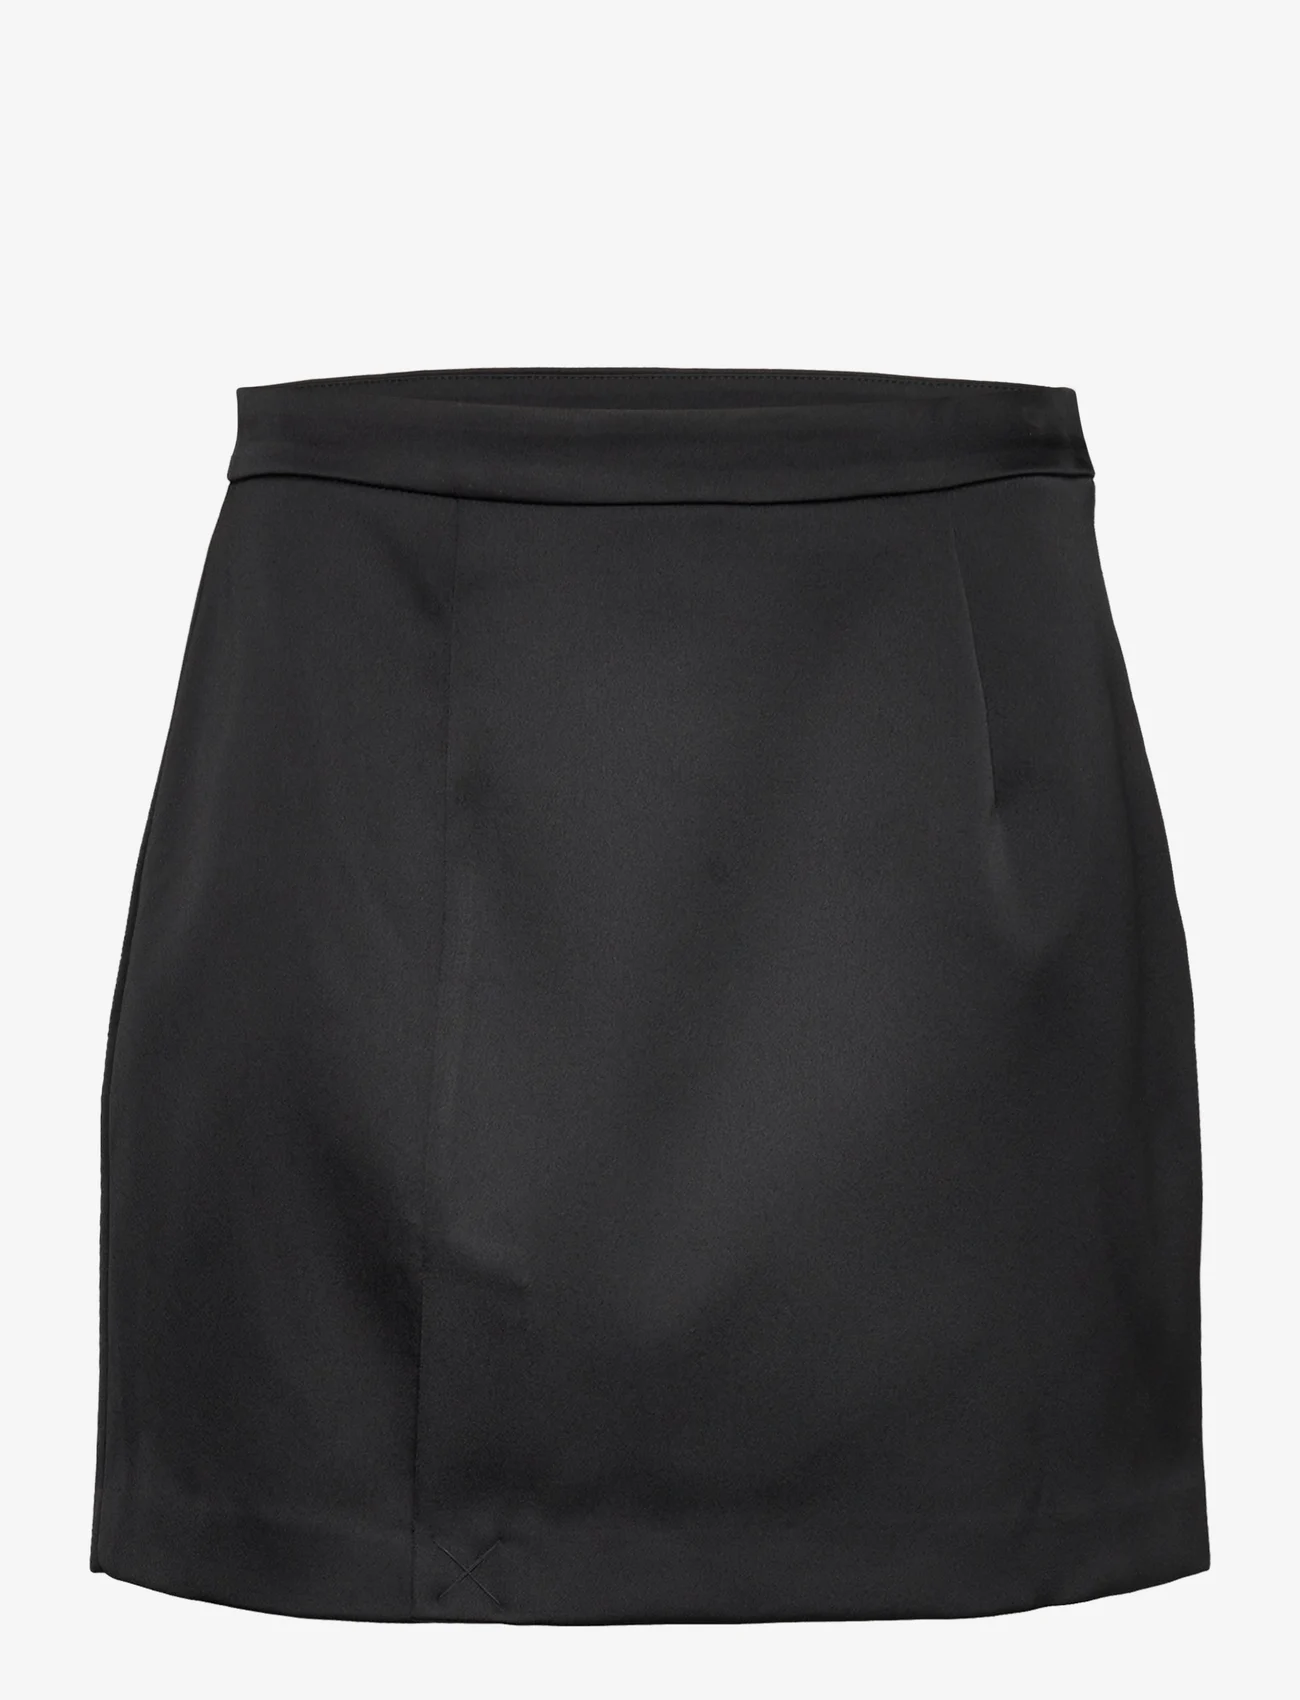 Cras - Samycras Skirt - kort skjørt - black - 0